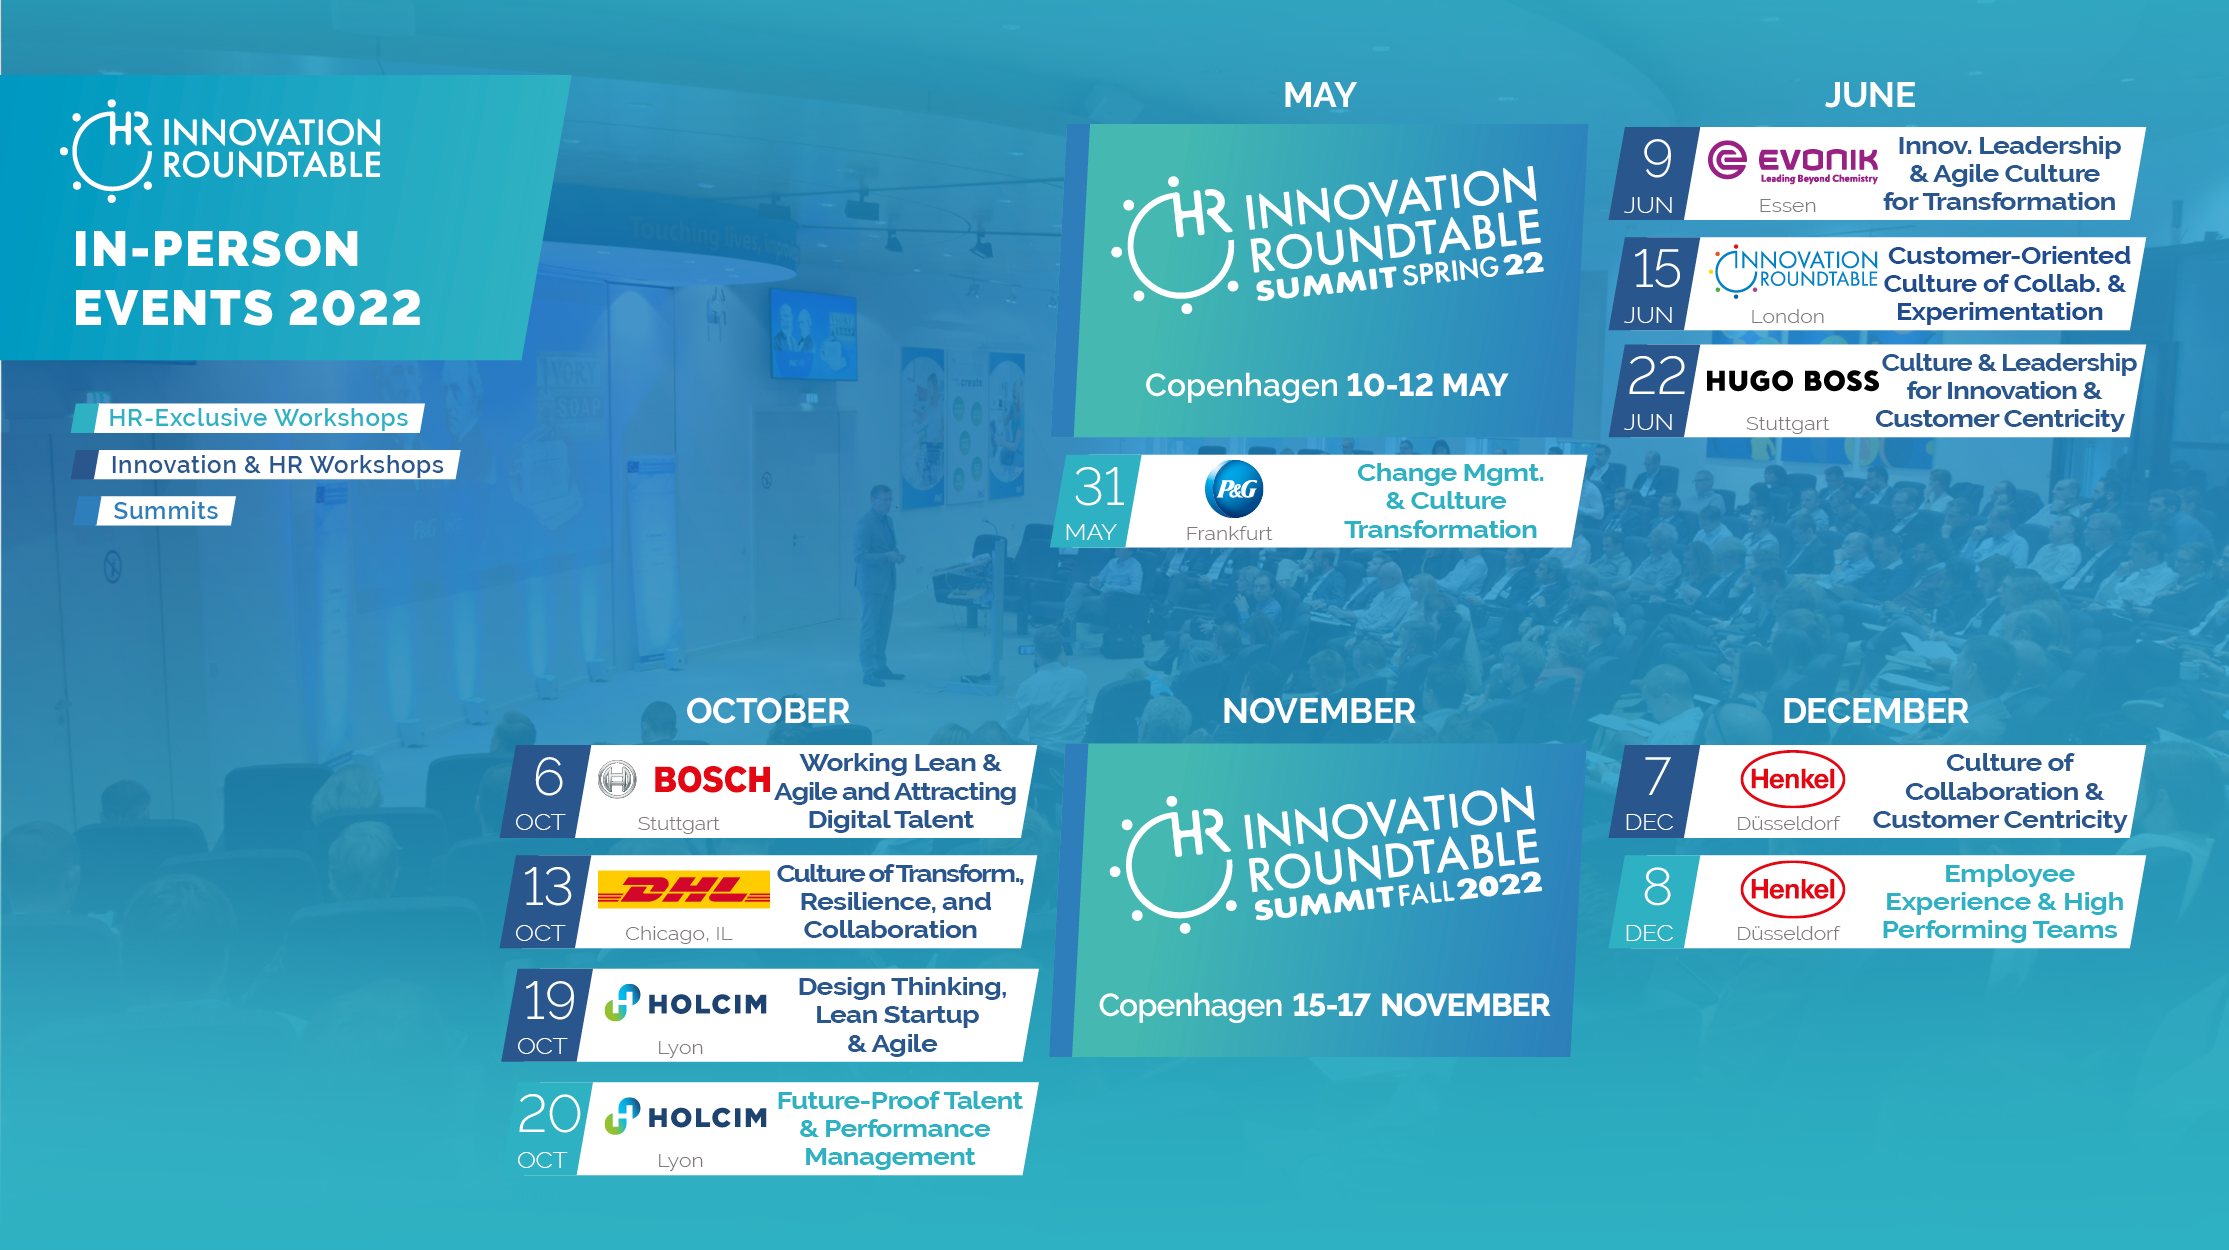 HR Innovation Roundtable Calendar Overview